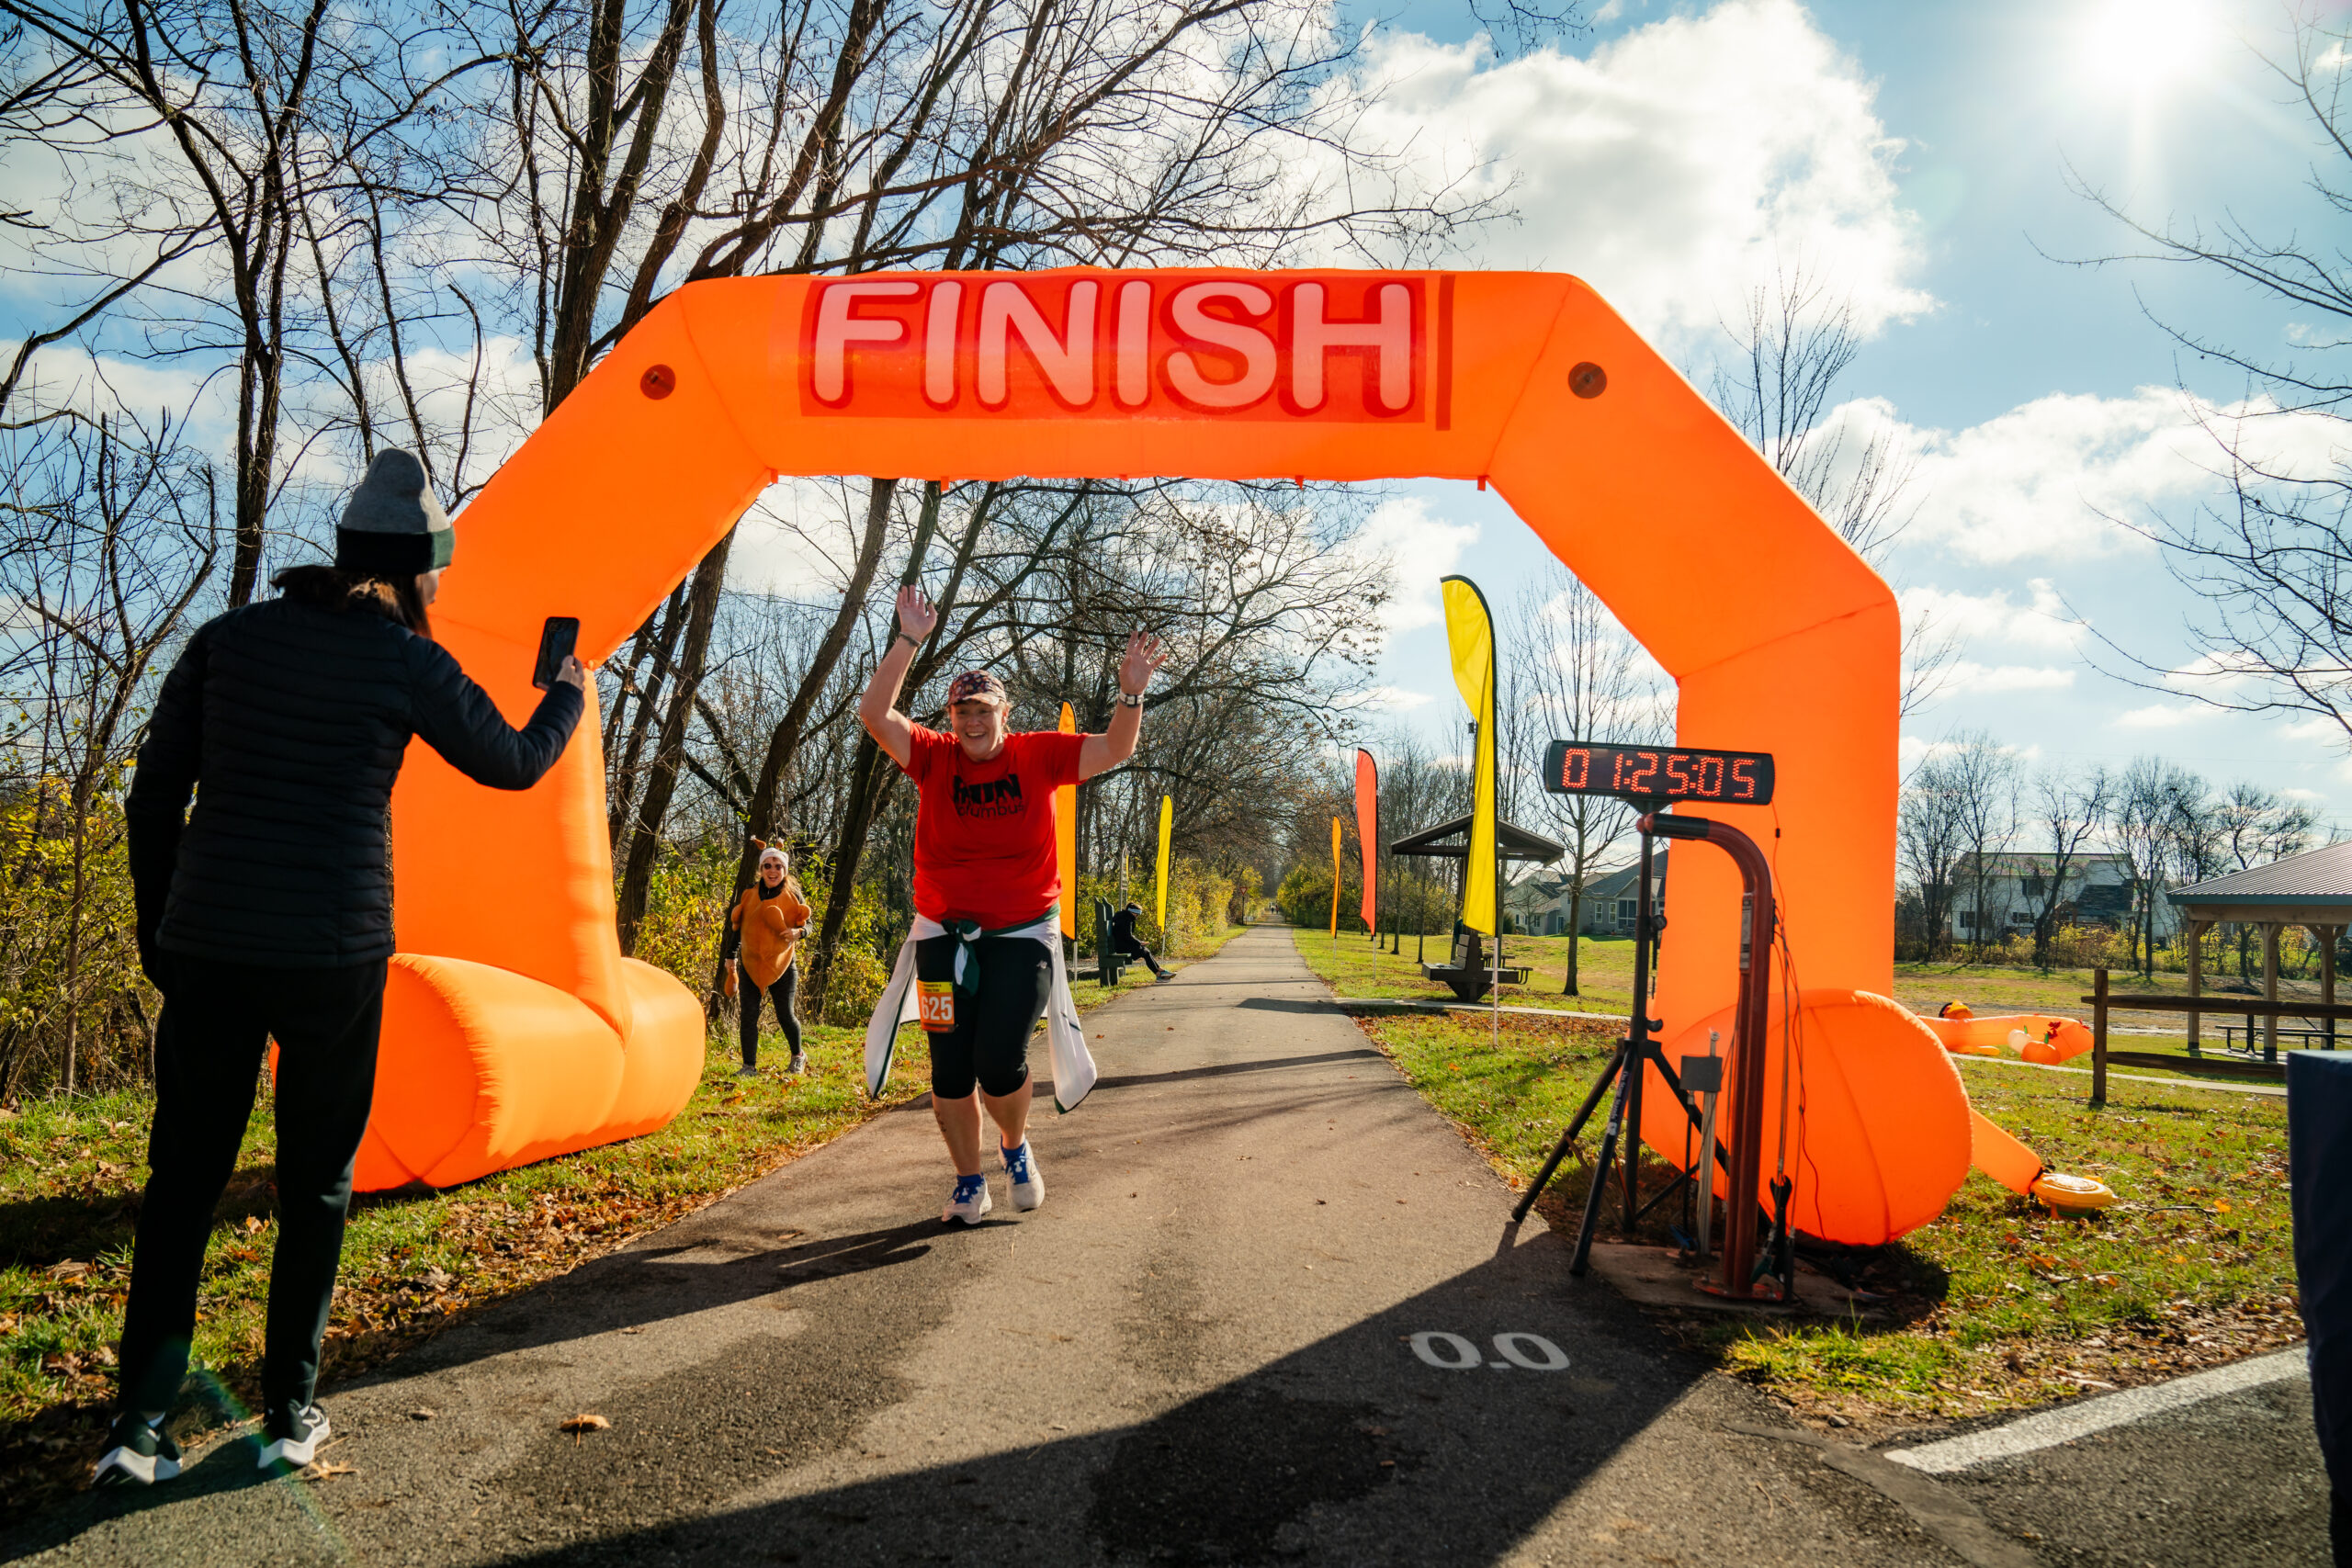 Ohio Turkey Trot Race Finisher - USA Race Timing & Event Management - The Premier Chip Timing Race Company In Ohio - Kids Fun Run, Kids Dash, 1 Mile, 5k, 5mi, 10k, 1/2 Marathon, Marathon